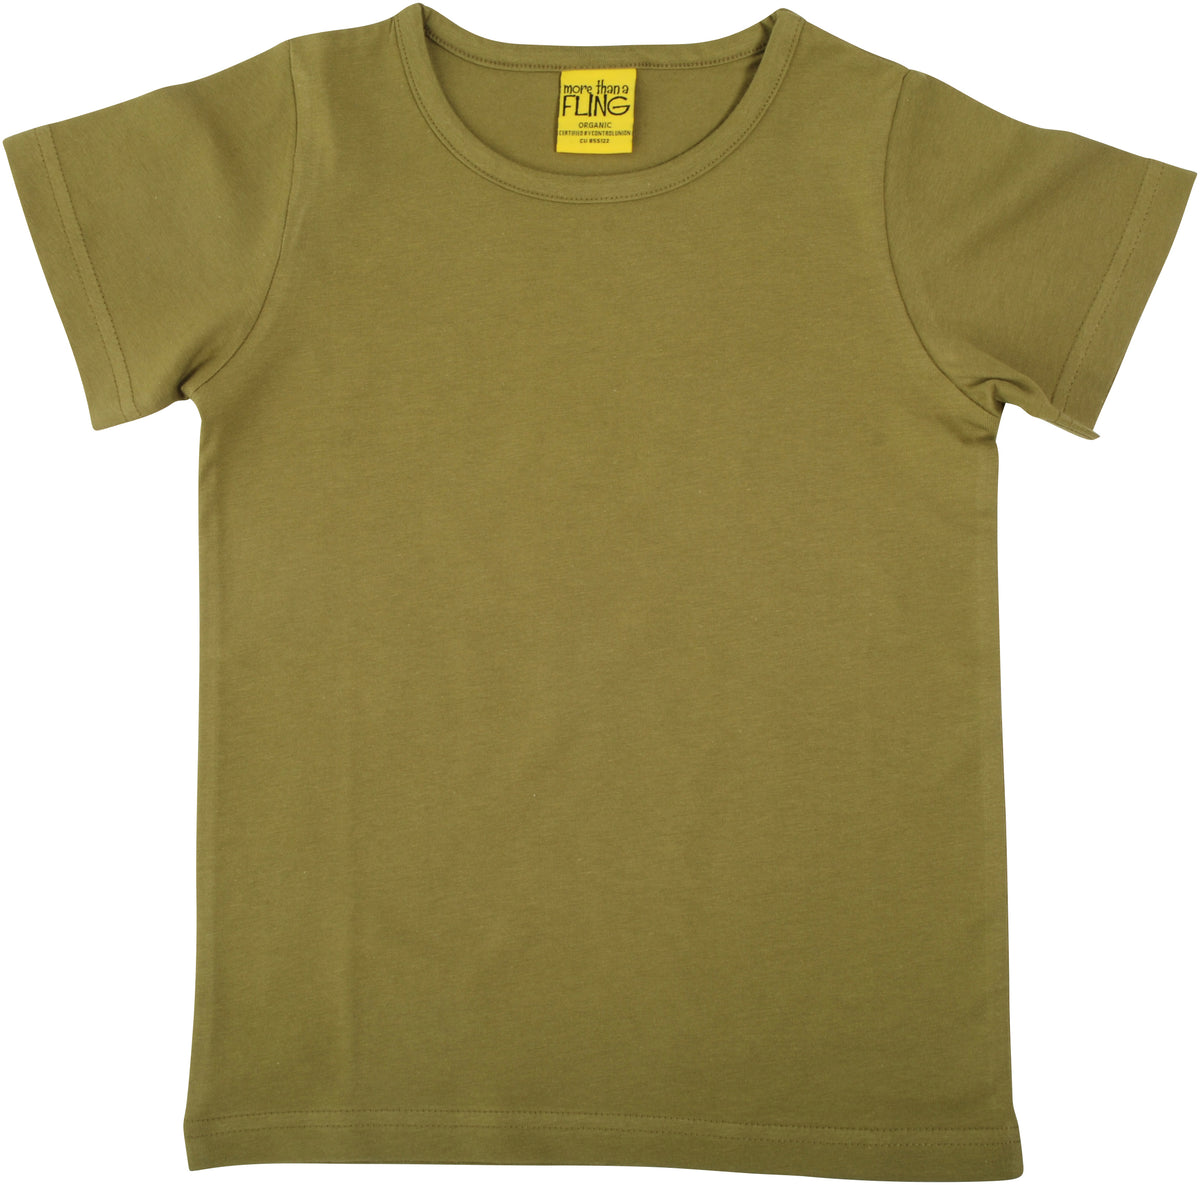 More Than A Fling ADULT - T-Shirt Sage Green